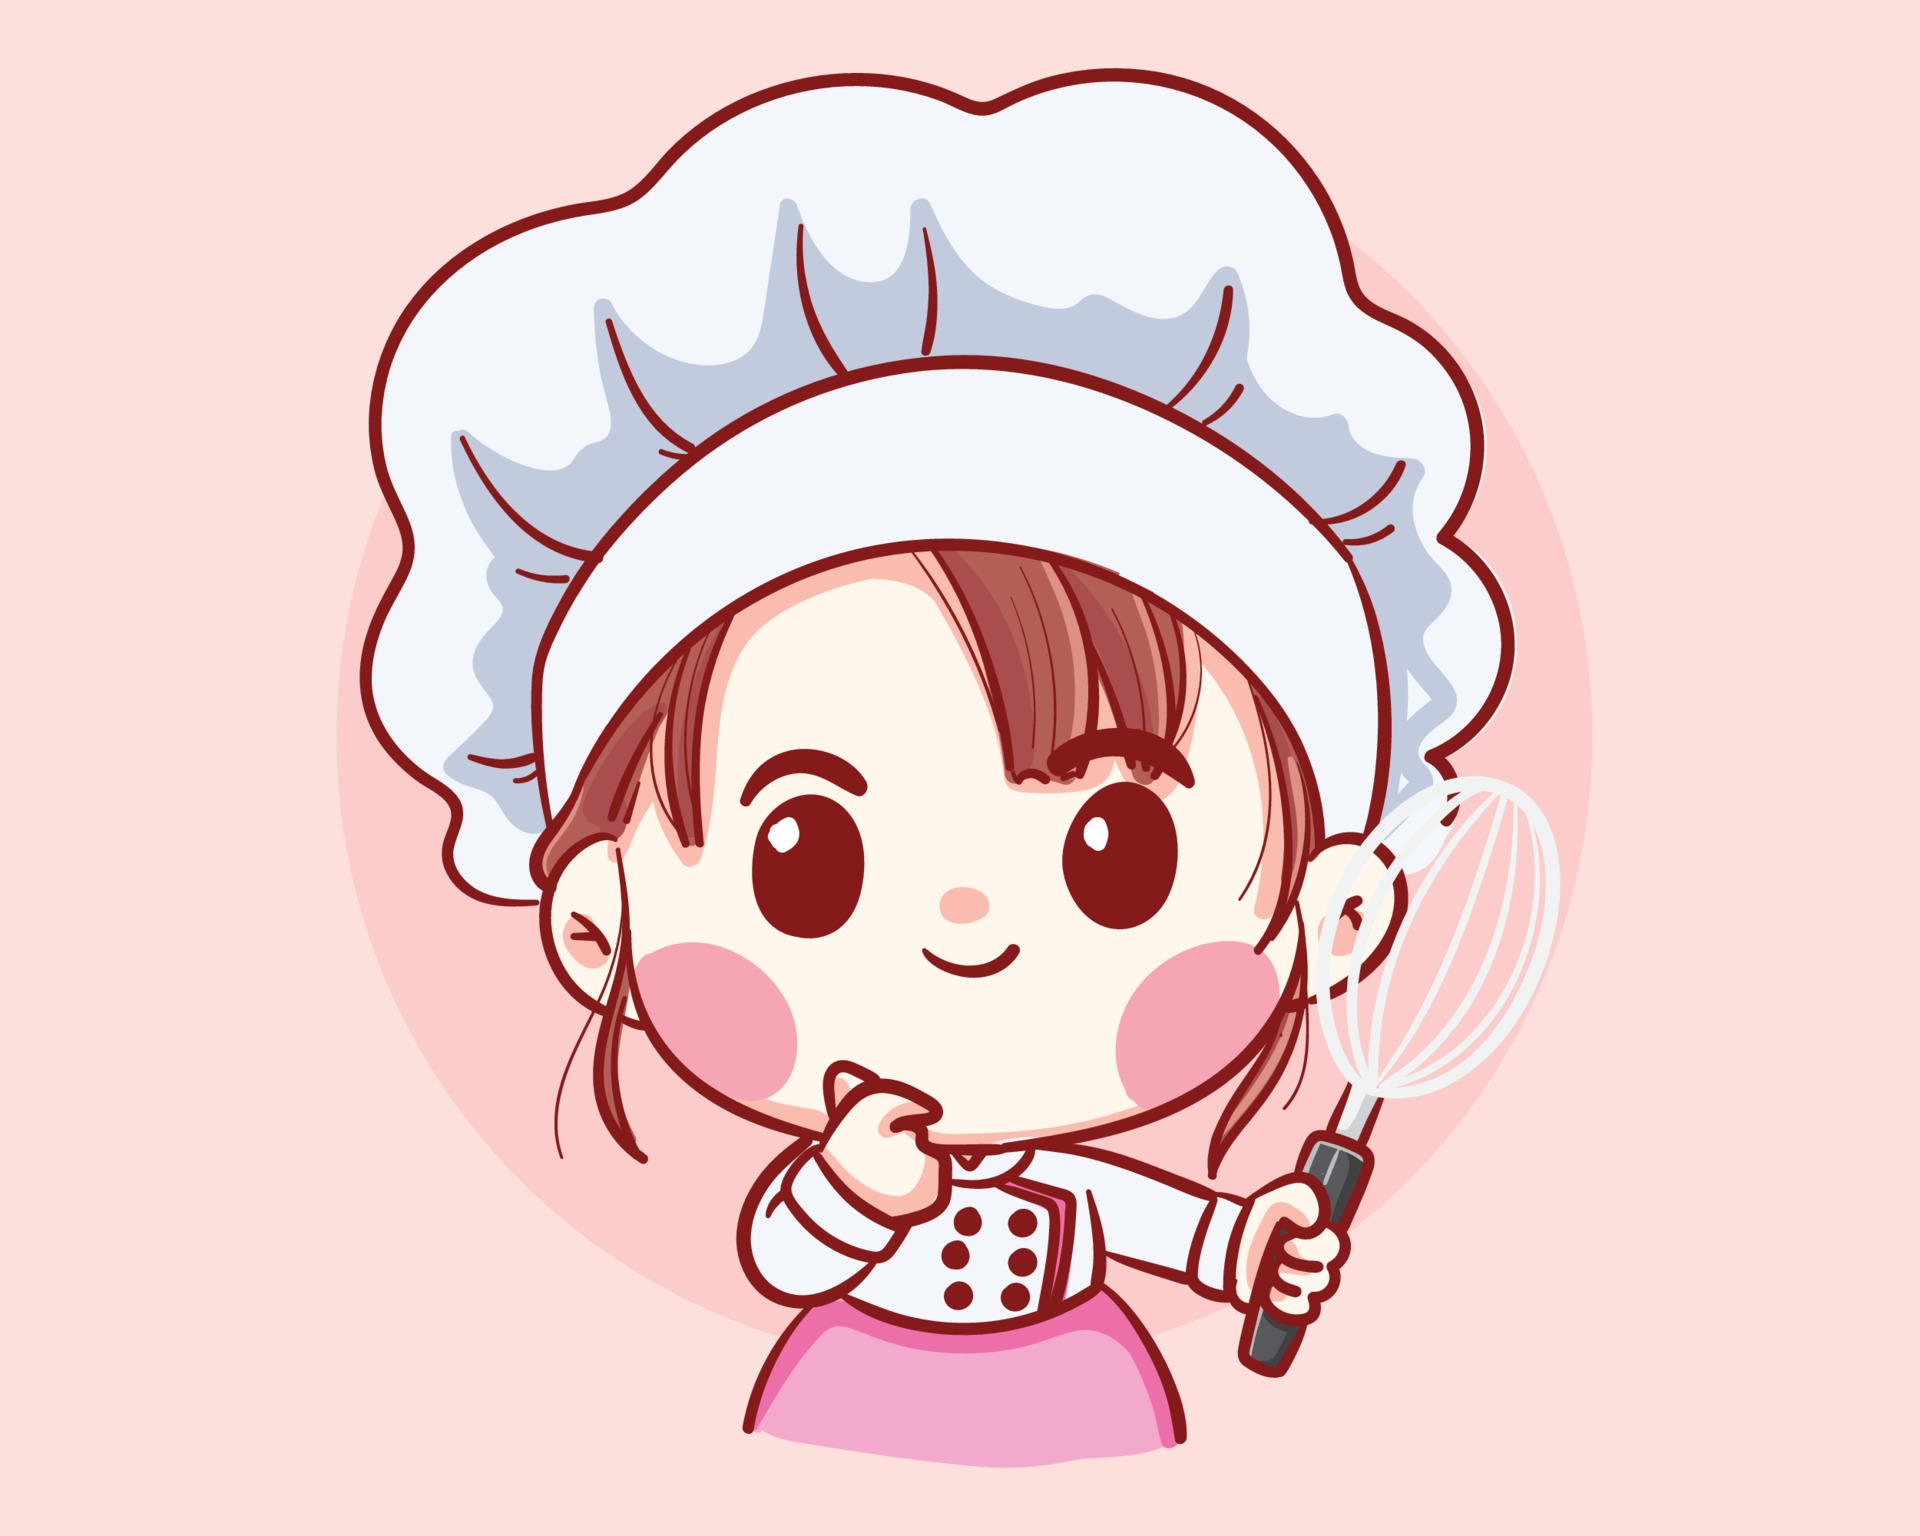 Bakery Cartoon Images ~ Kitchen Chef Cartoon Illustration Of Woman ...